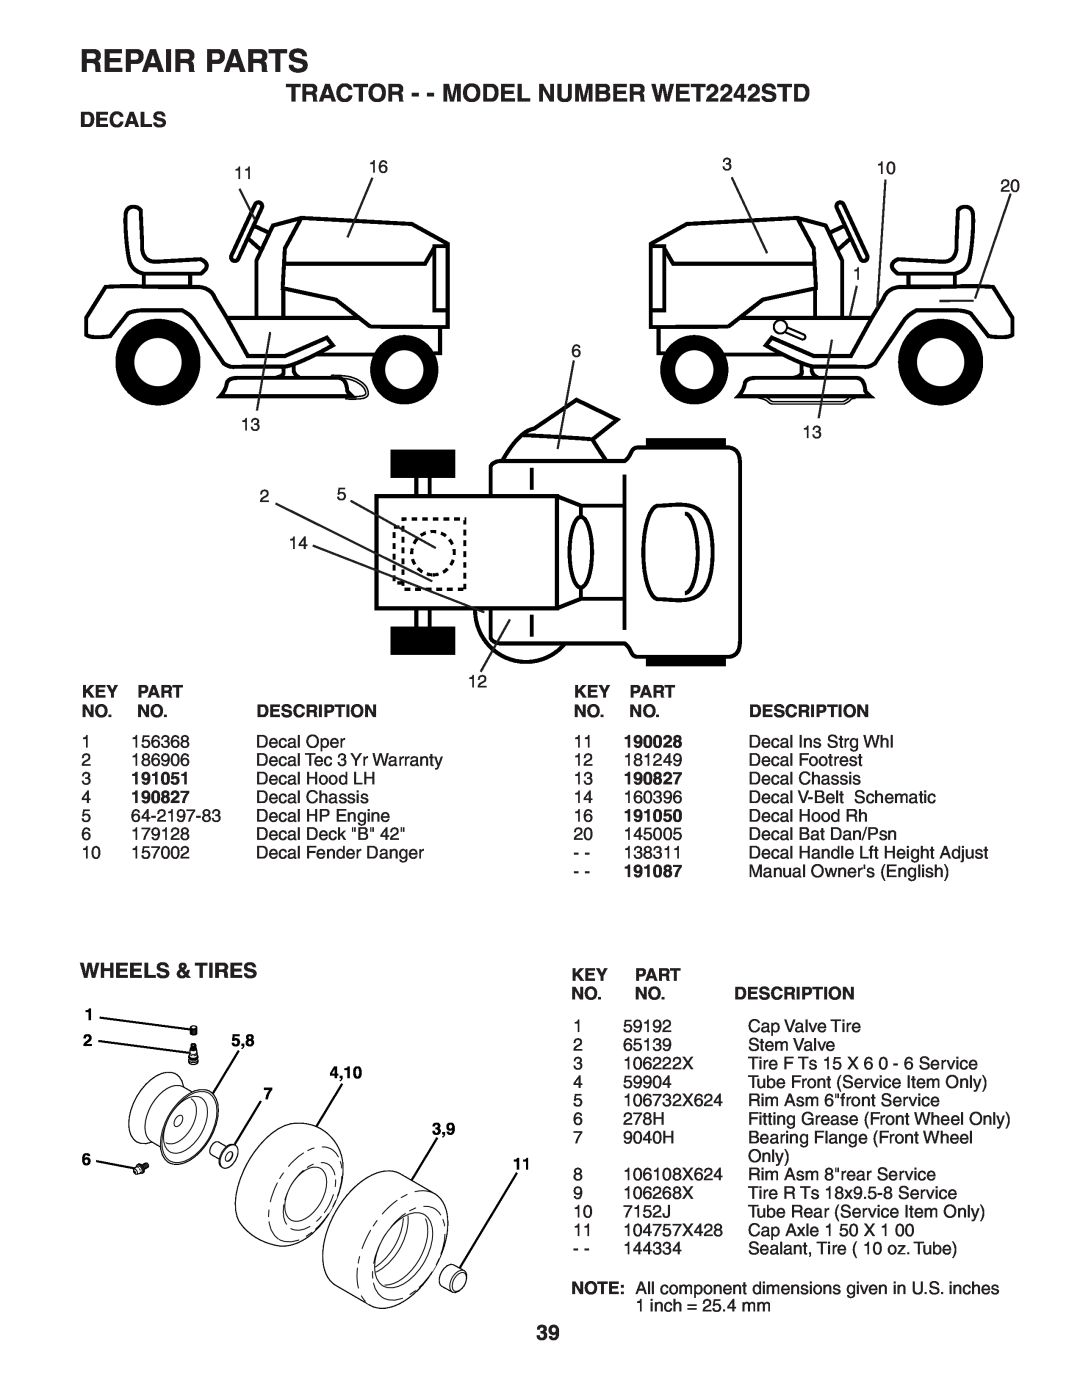 Weed Eater 191087 manual Decals, Wheels & Tires, Repair Parts, TRACTOR - - MODEL NUMBER WET2242STD 